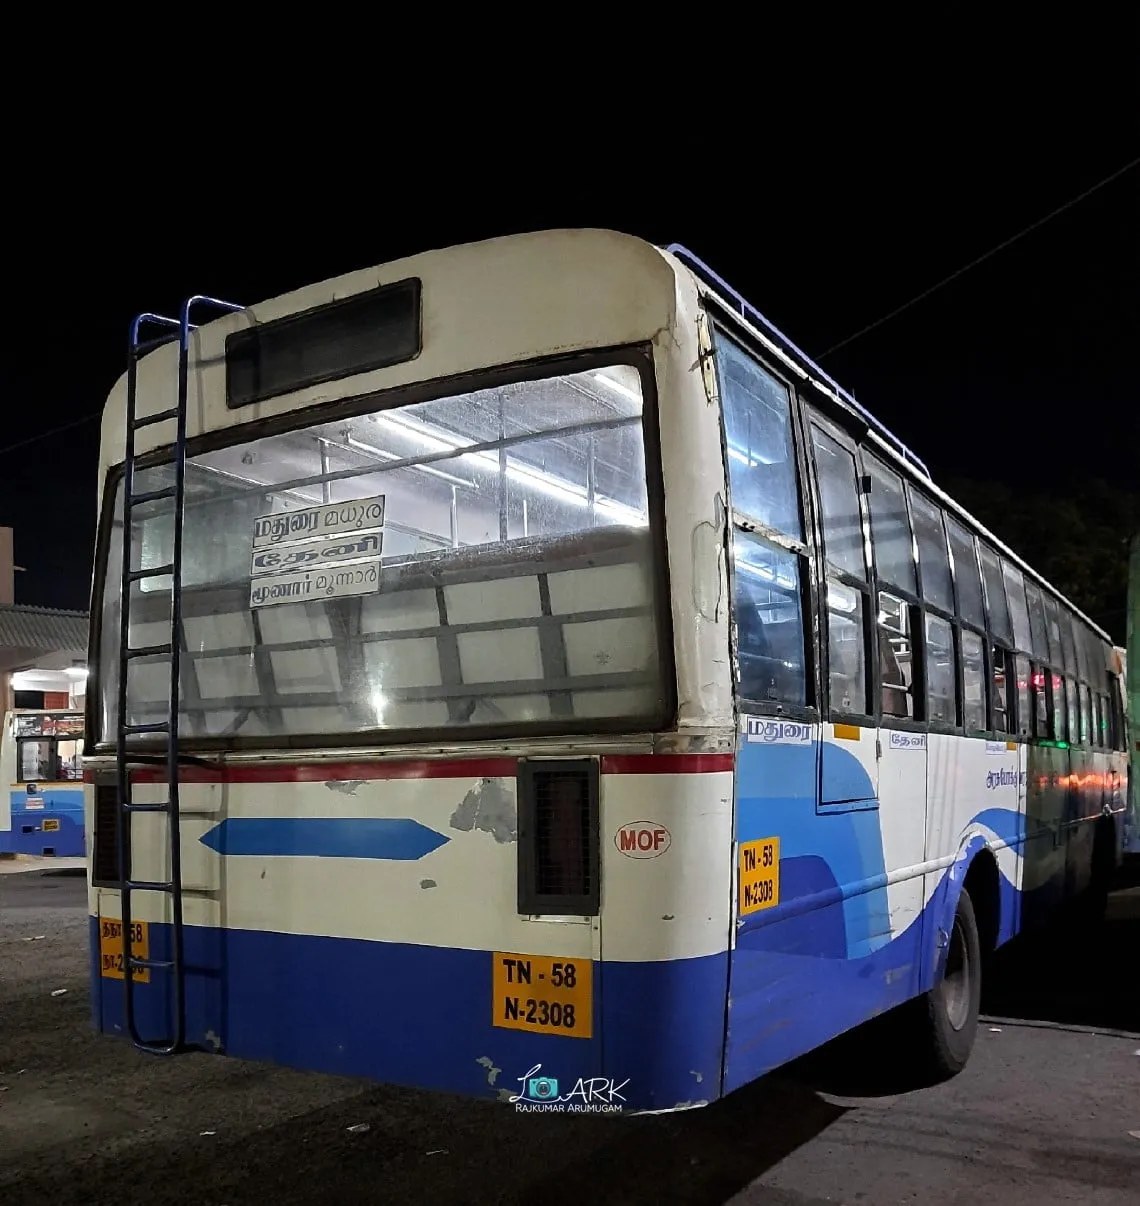 TNSTC TN 58 N 2308 Munnar - Madurai Bus Timings